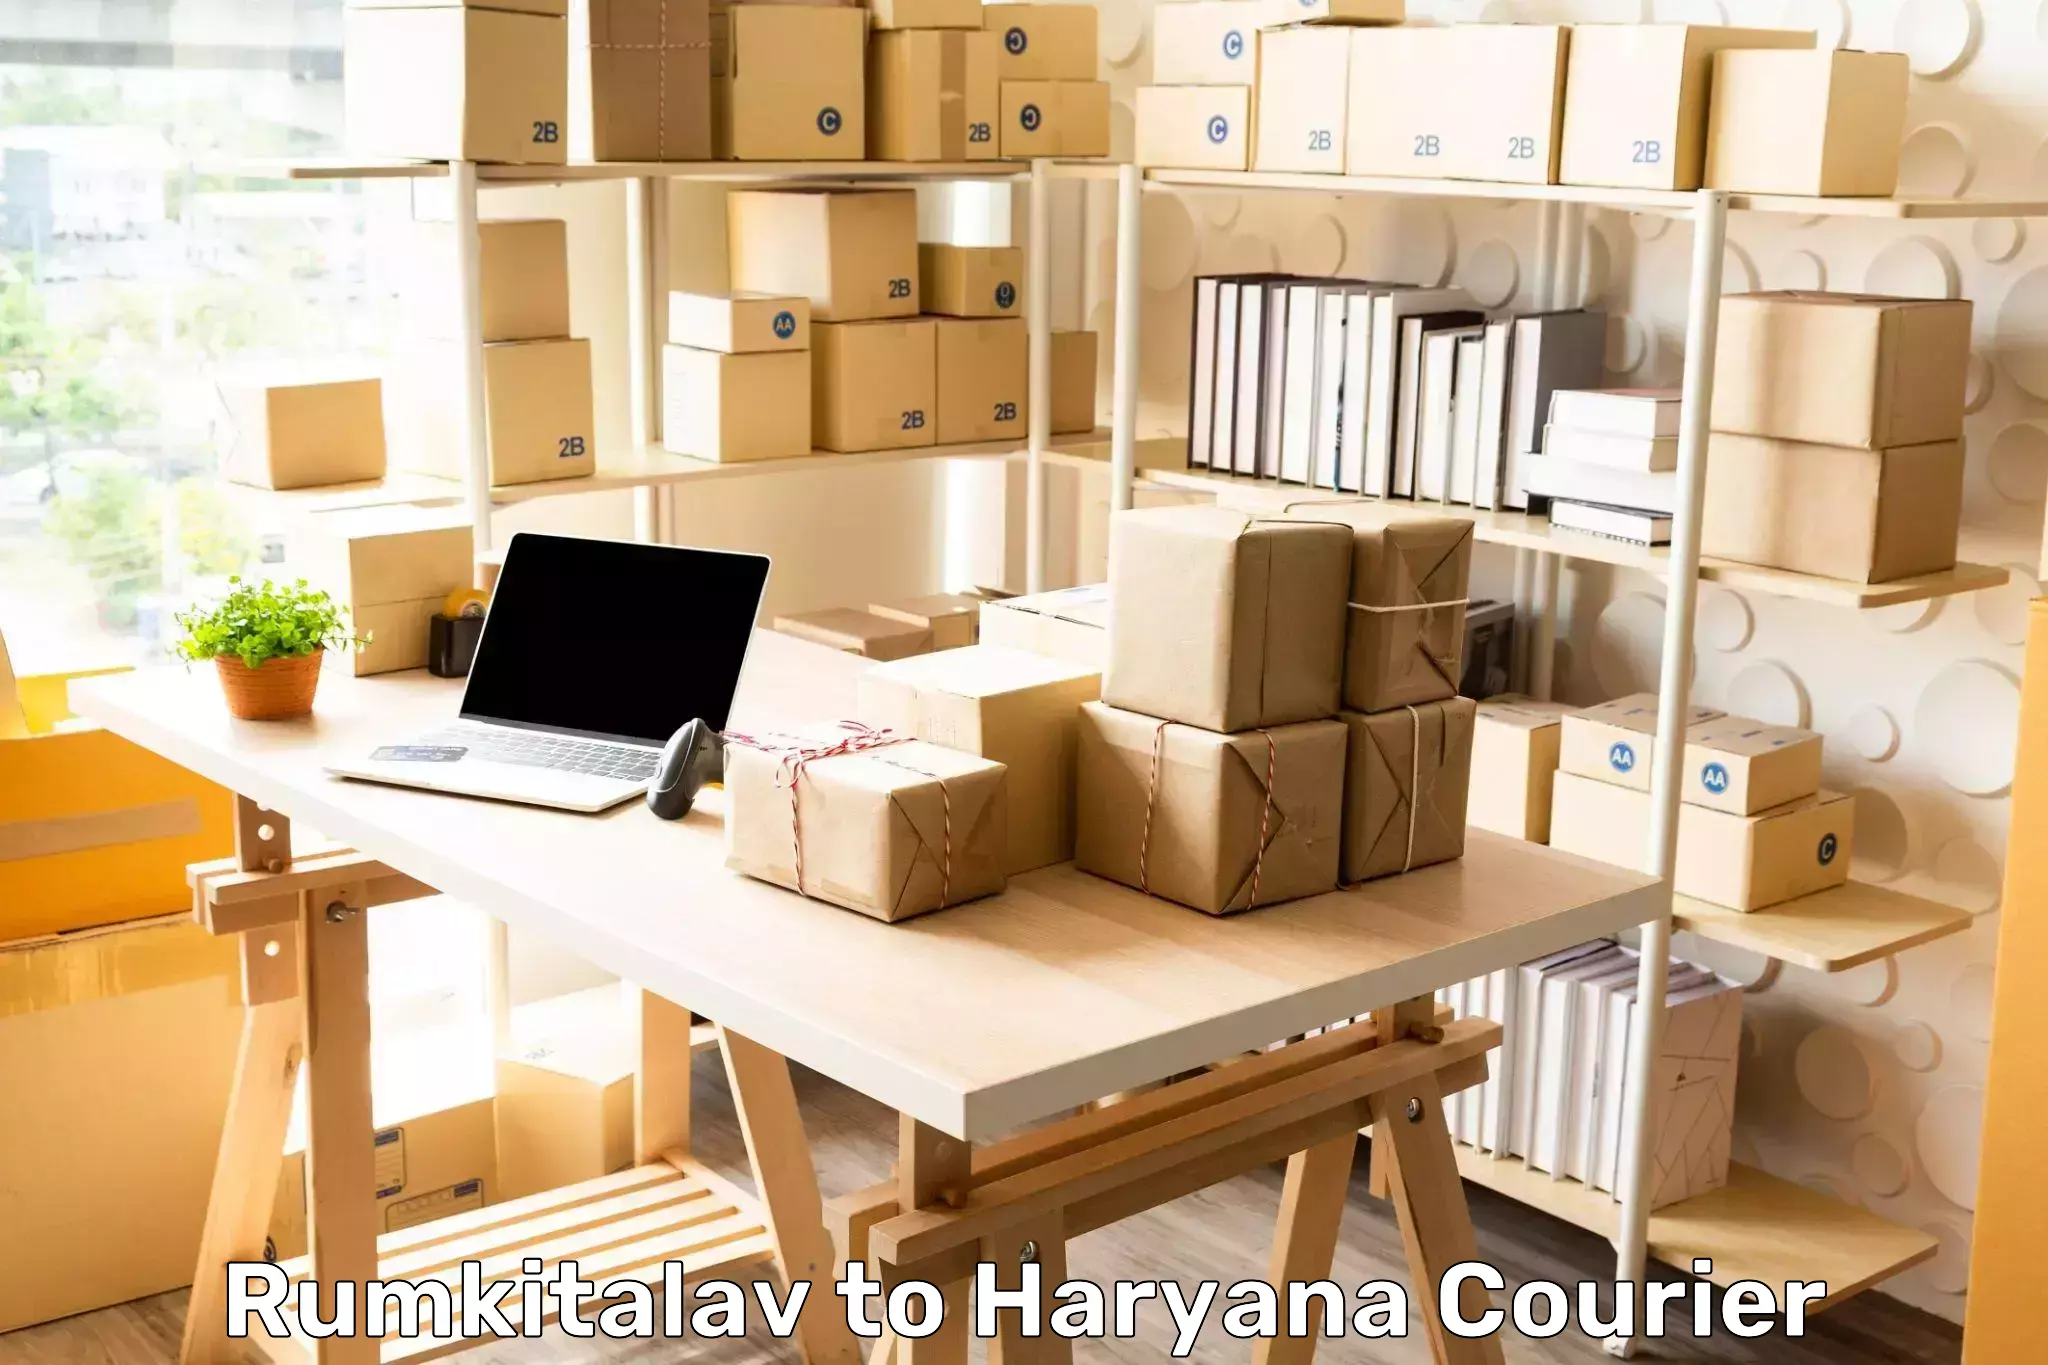 Courier service partnerships Rumkitalav to Haryana